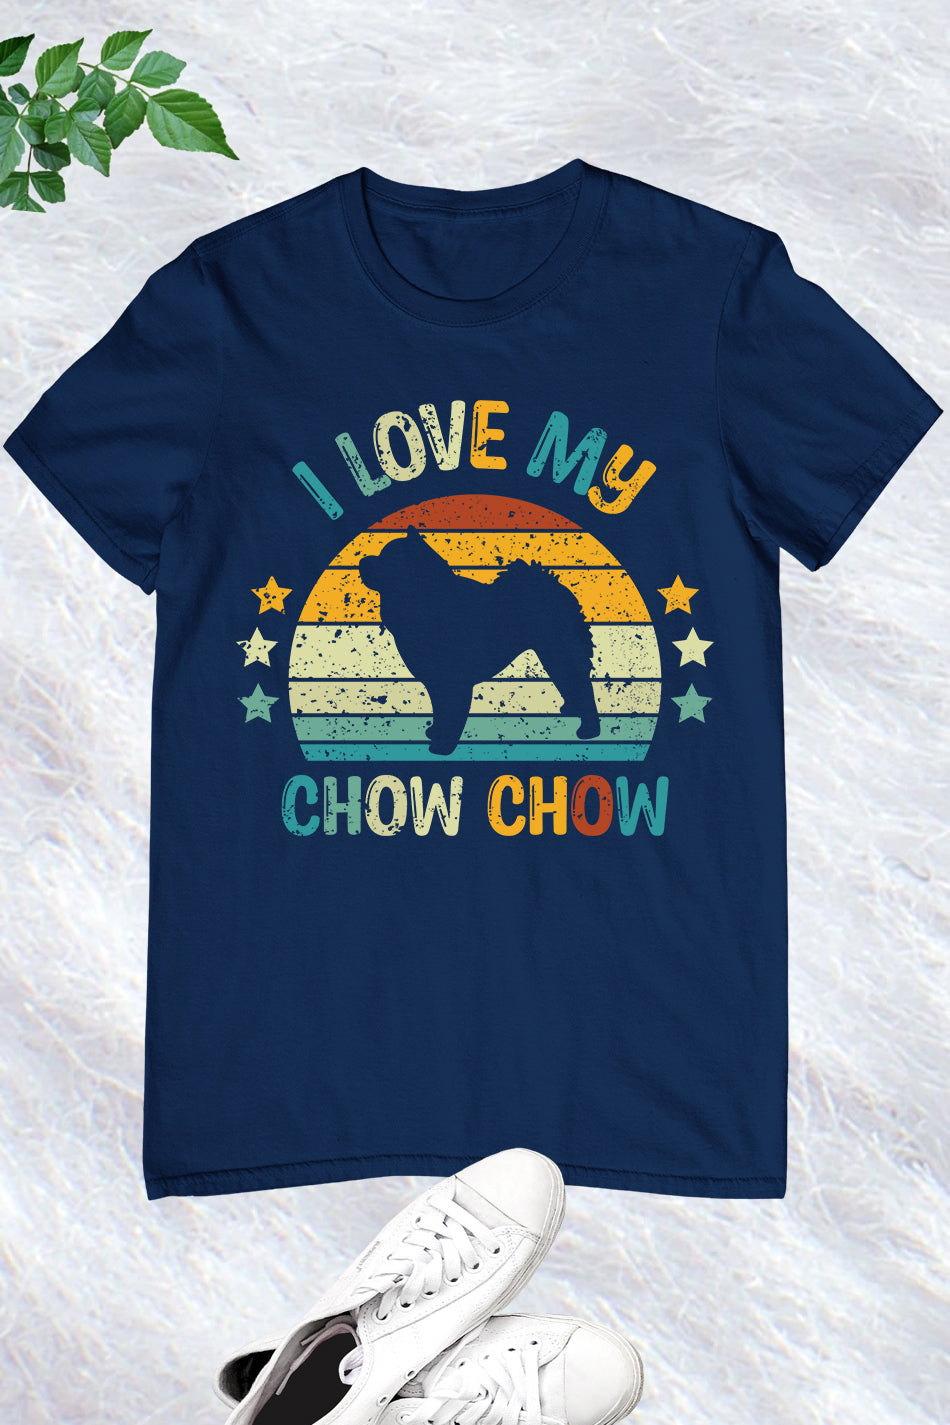 I Love My Chow Chow Vintage Retro Shirt